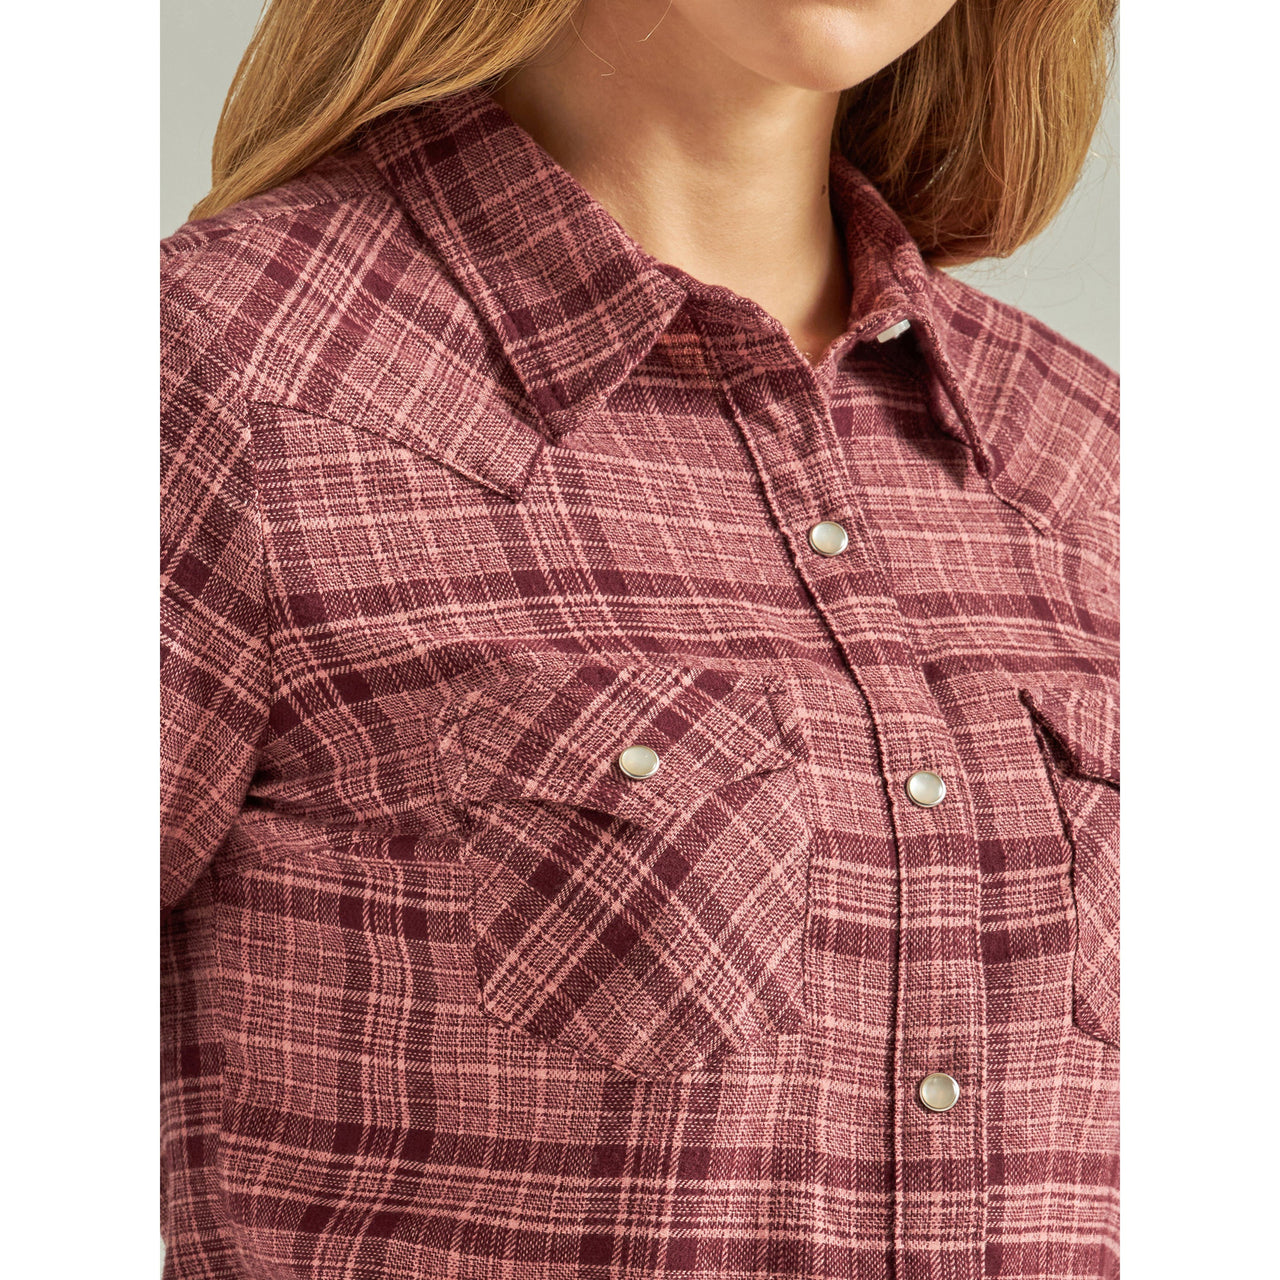 Wrnagler Women's Long Sleeve Essential Flannel - Plaid Rose